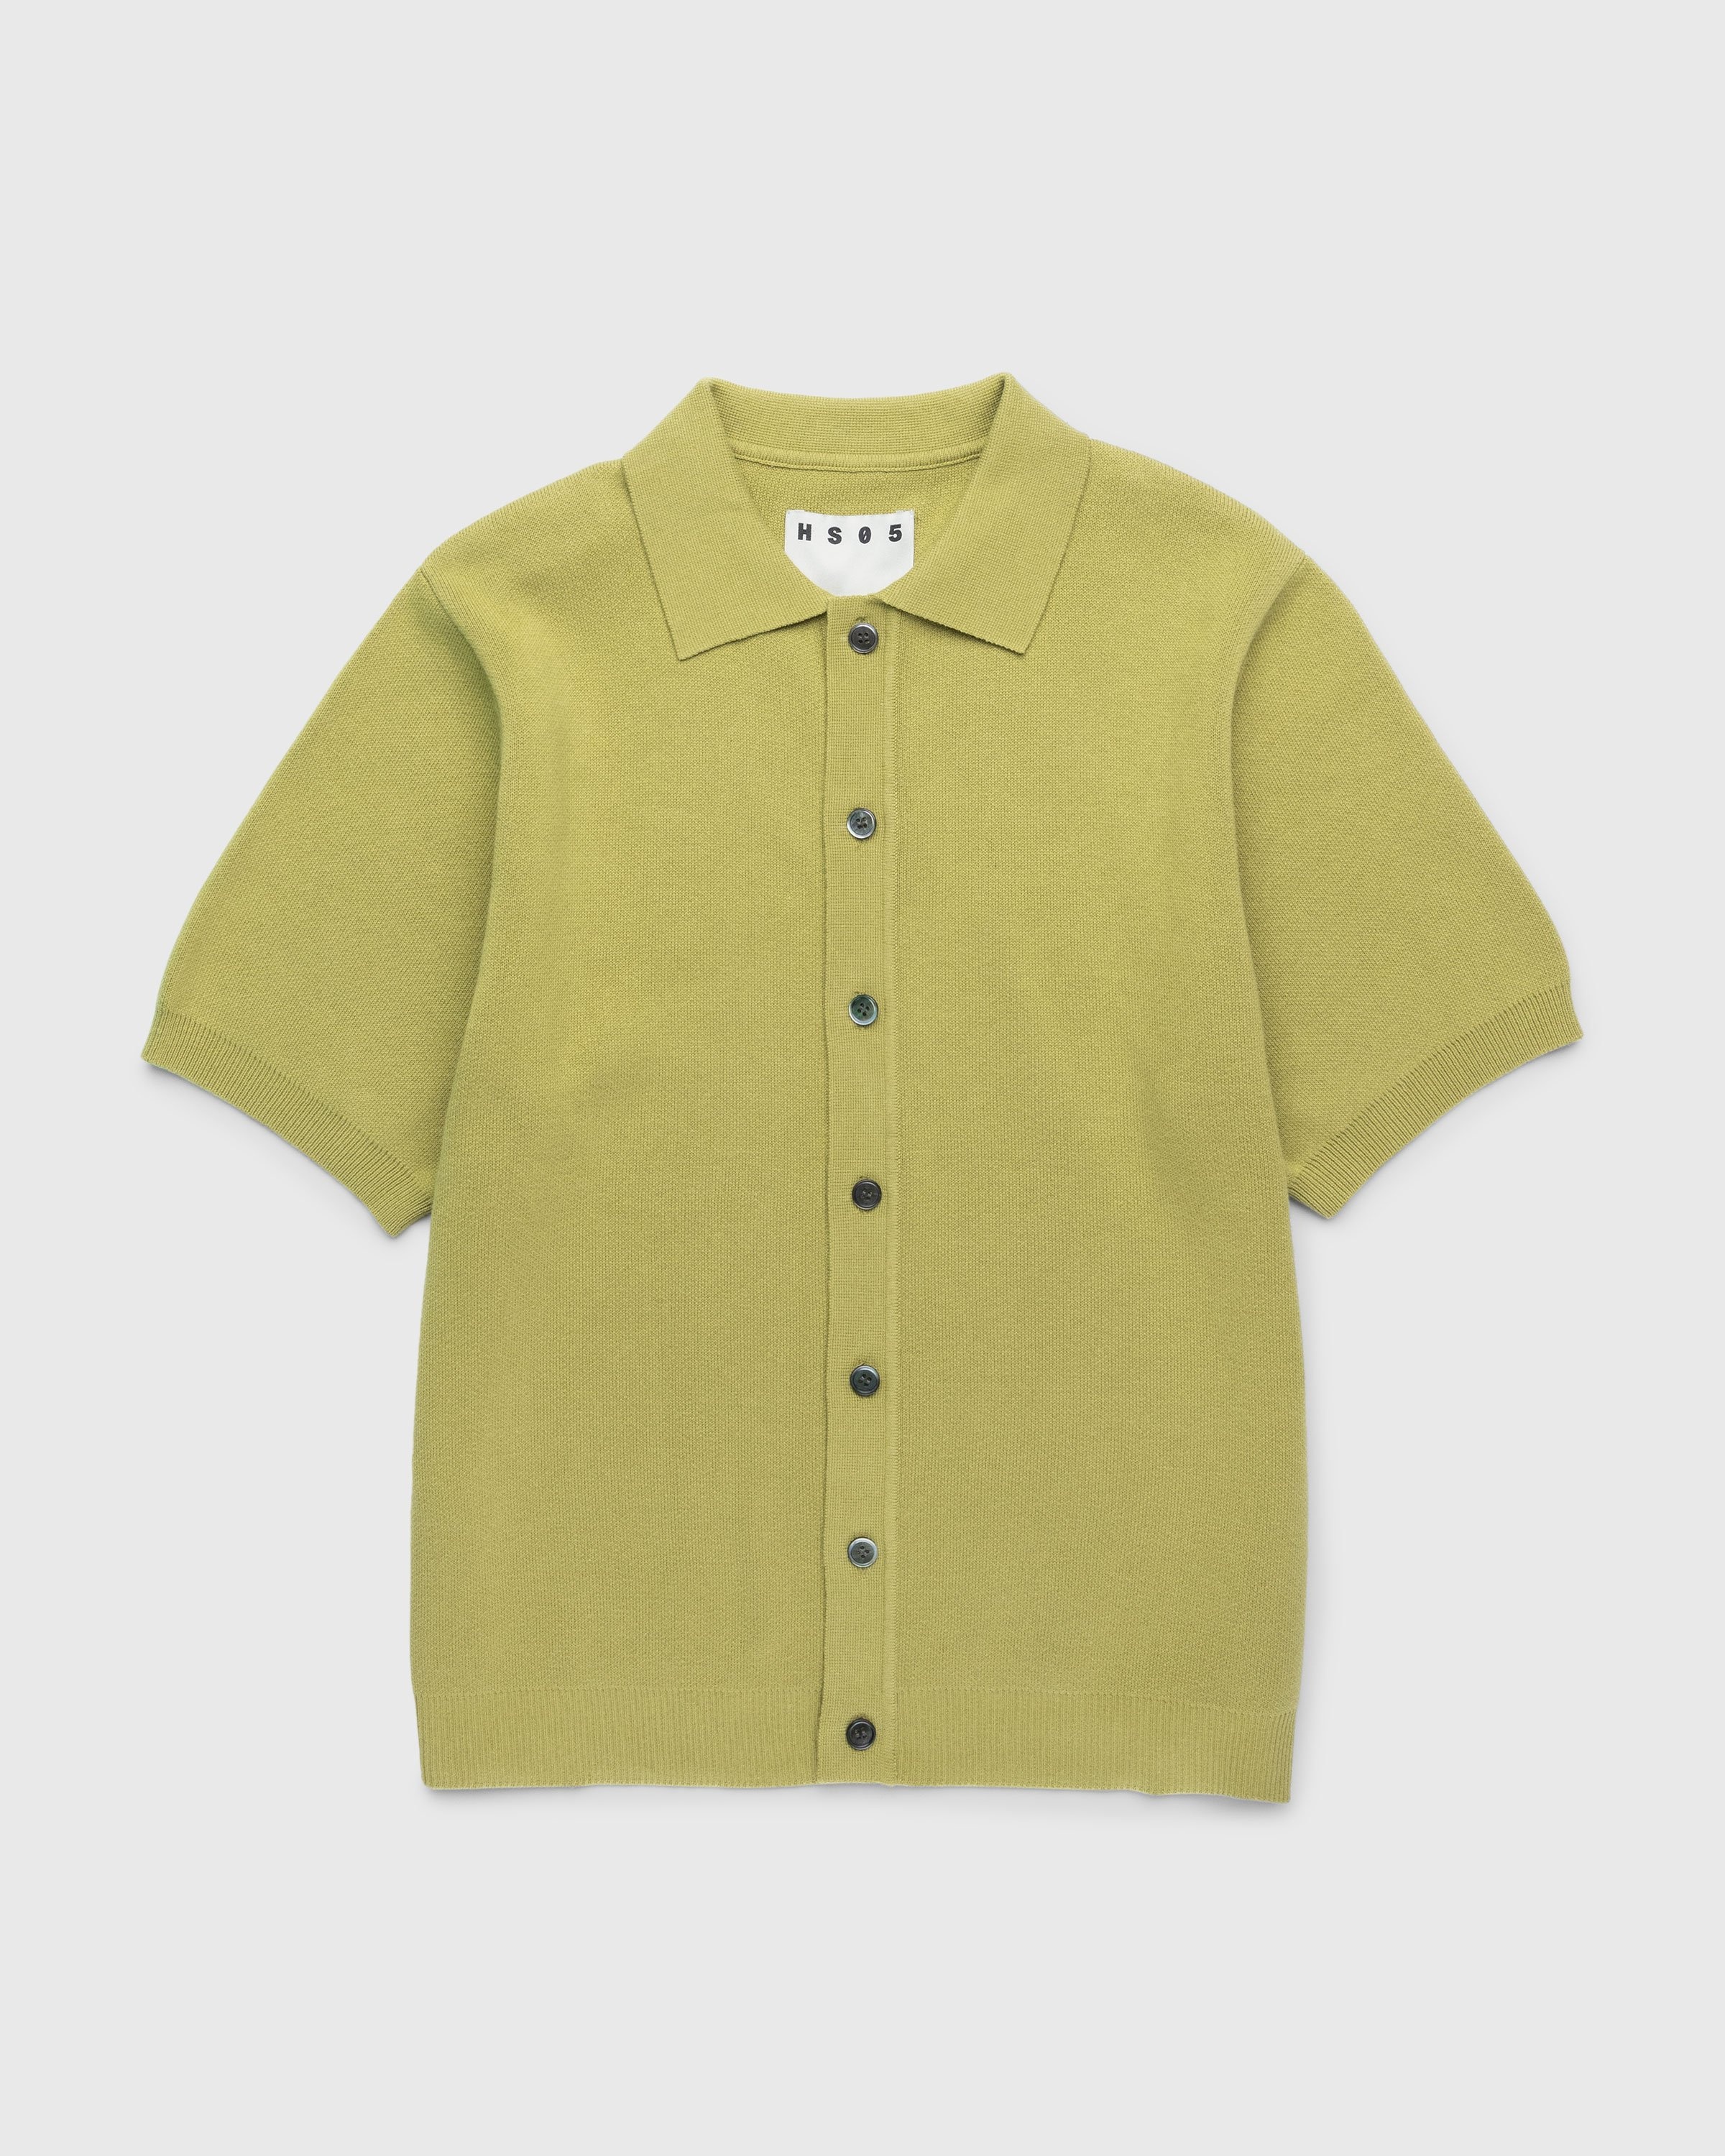 Highsnobiety HS05 – Cotton Knit Shirt Green - Shirts - Green - Image 1